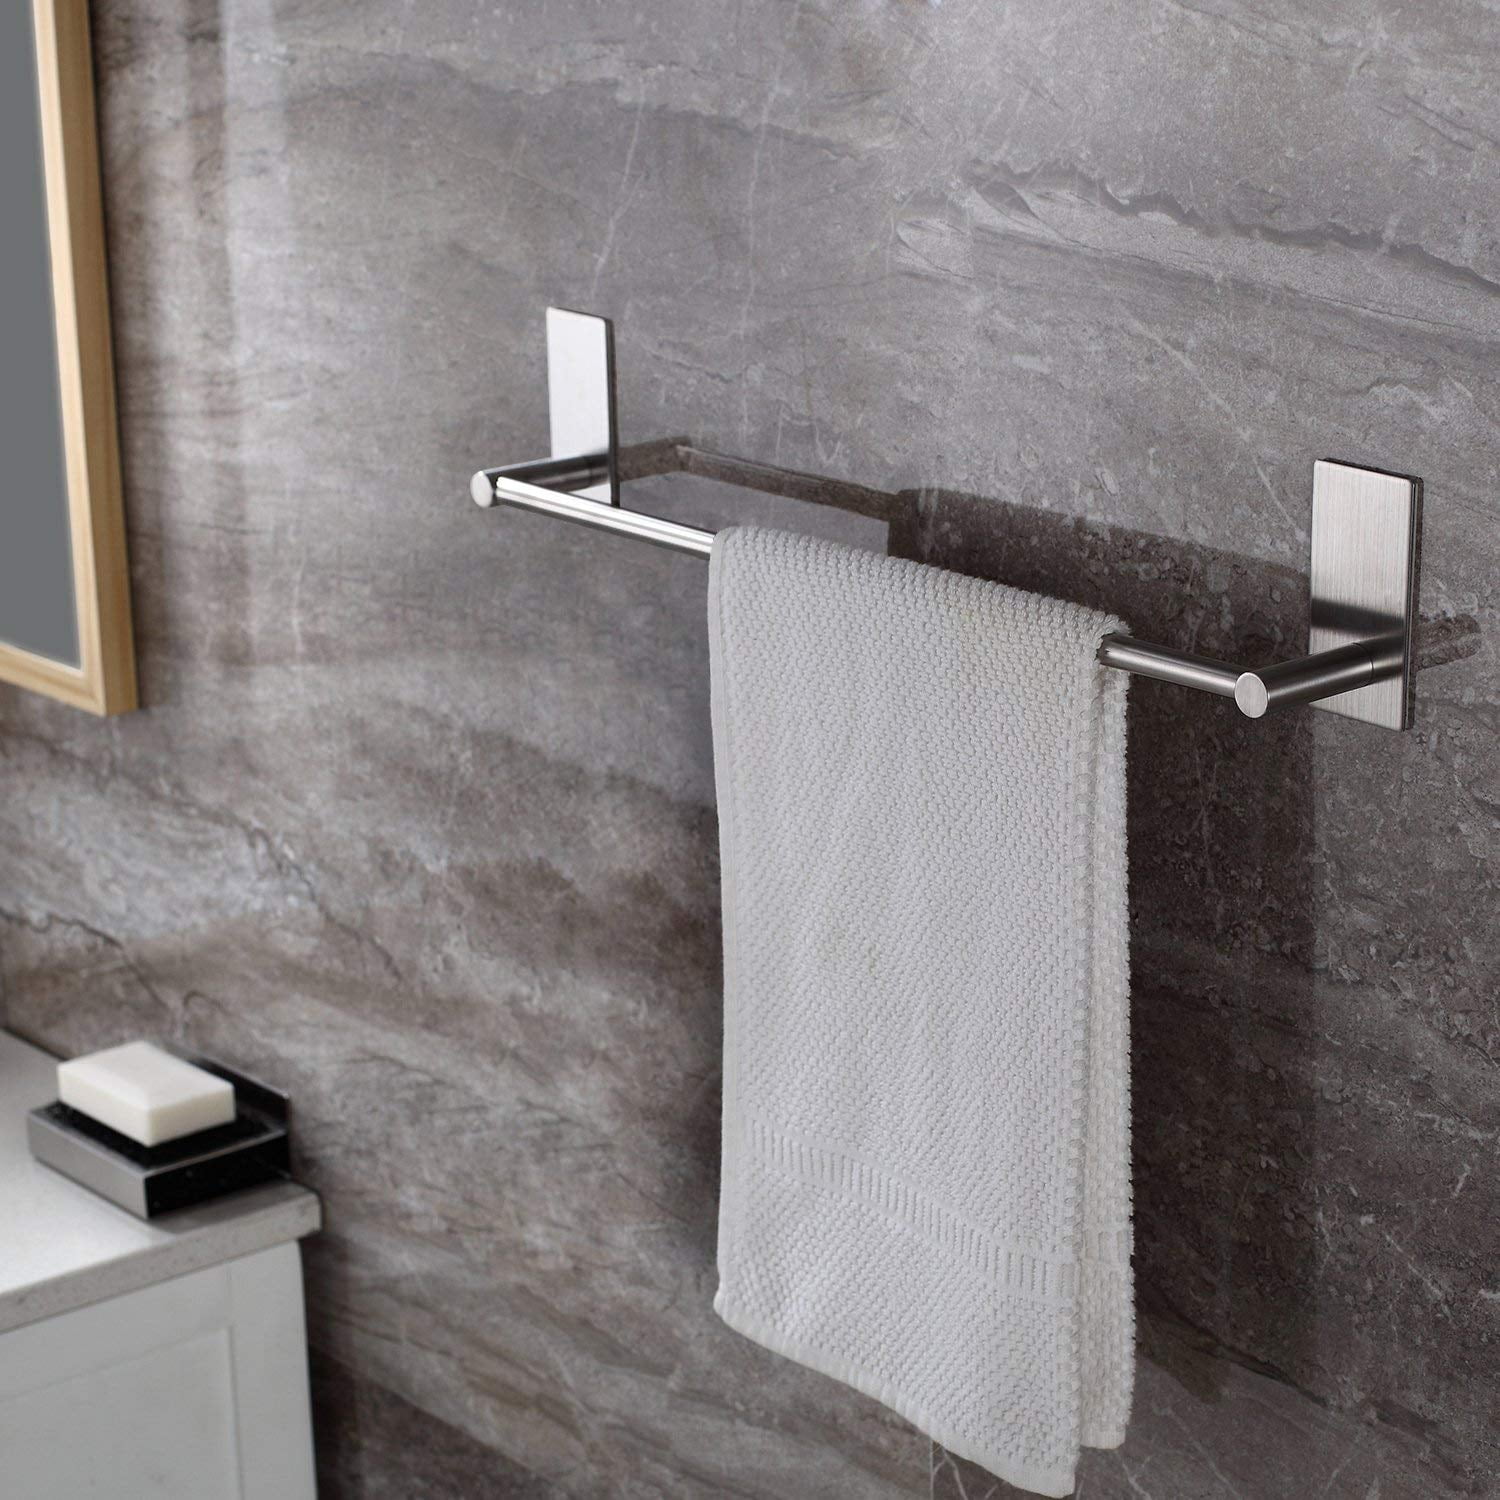 3M Self Adhesive Brushed Gold Towel Bar Ring SUS304 Bathroom Accessories Hooks